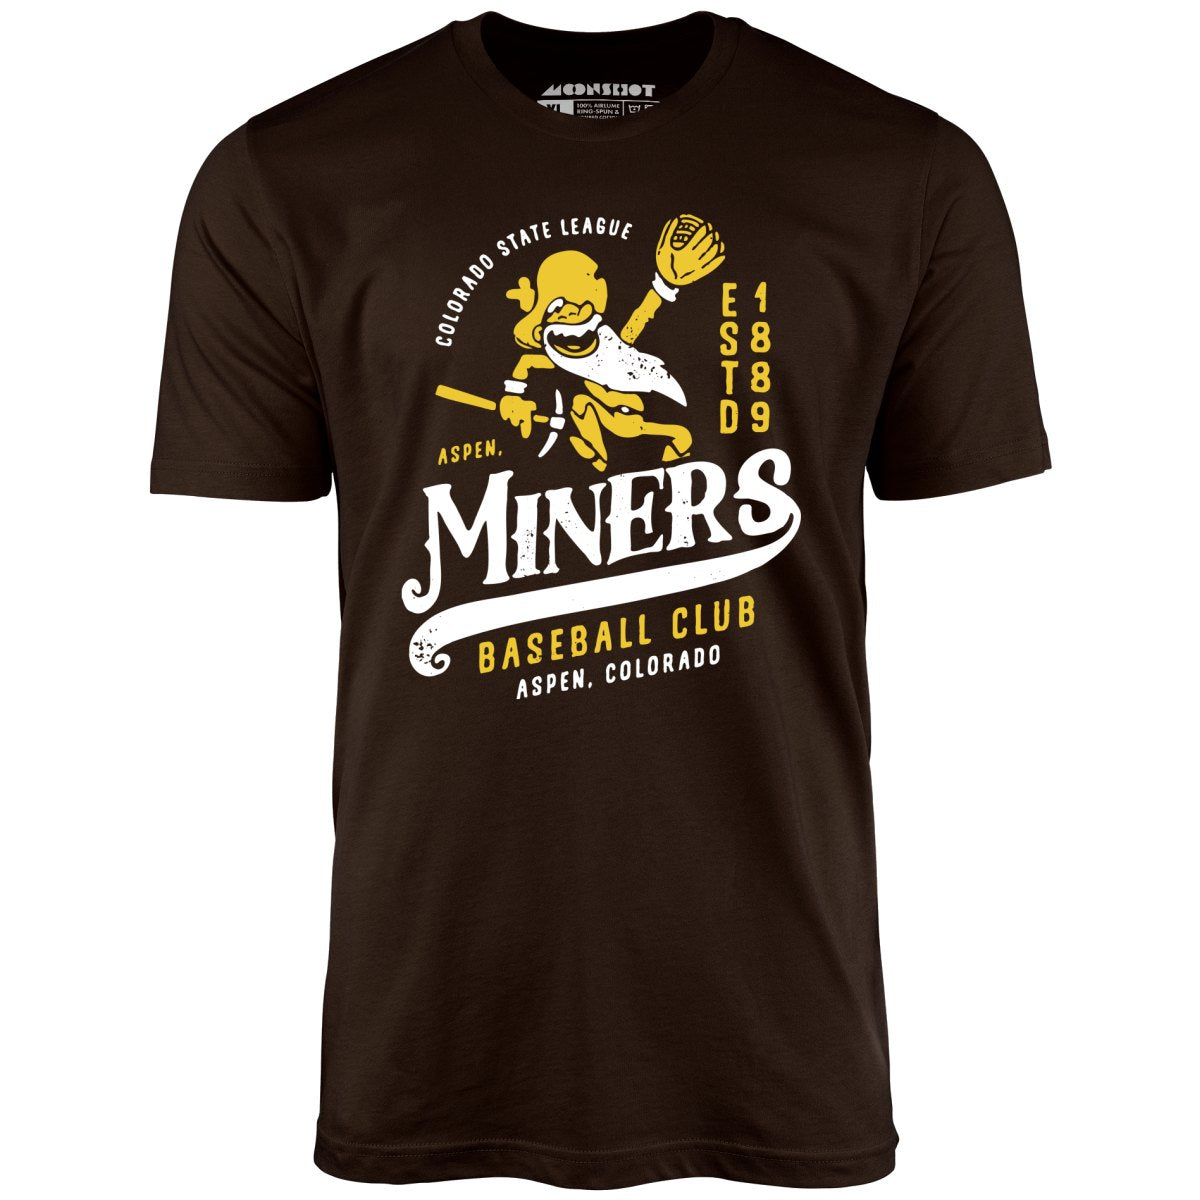 Aspen Miners - Colorado - Vintage Defunct Baseball Teams - Unisex T-Shirt